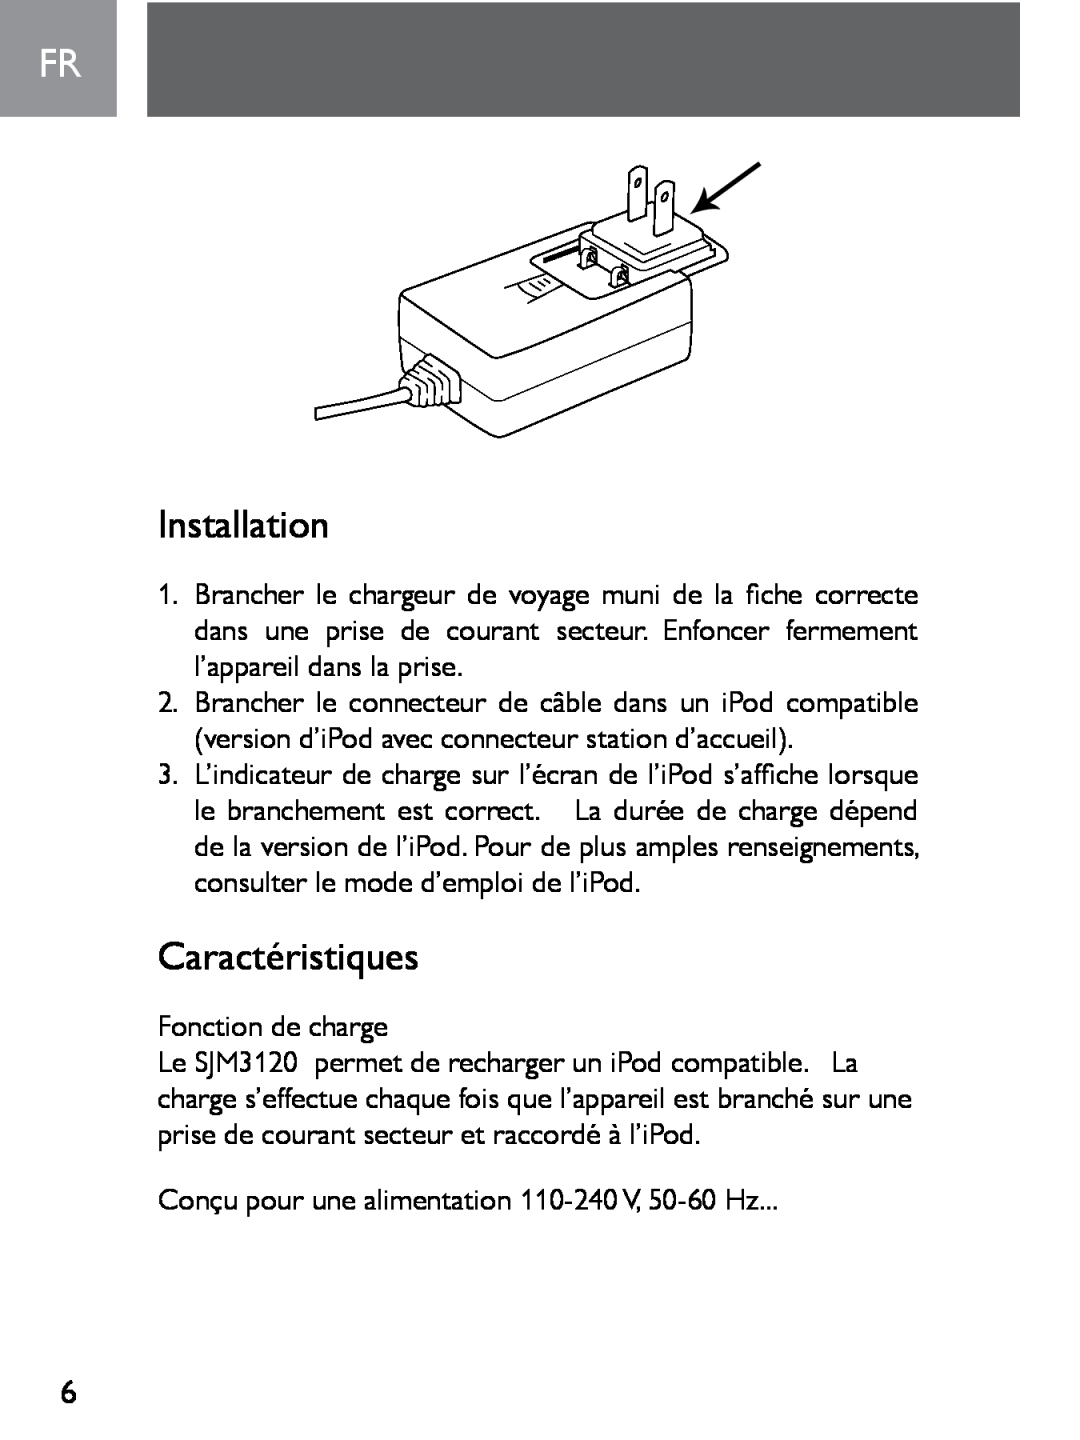 Philips SJM3120 user manual Installation, Caractéristiques 